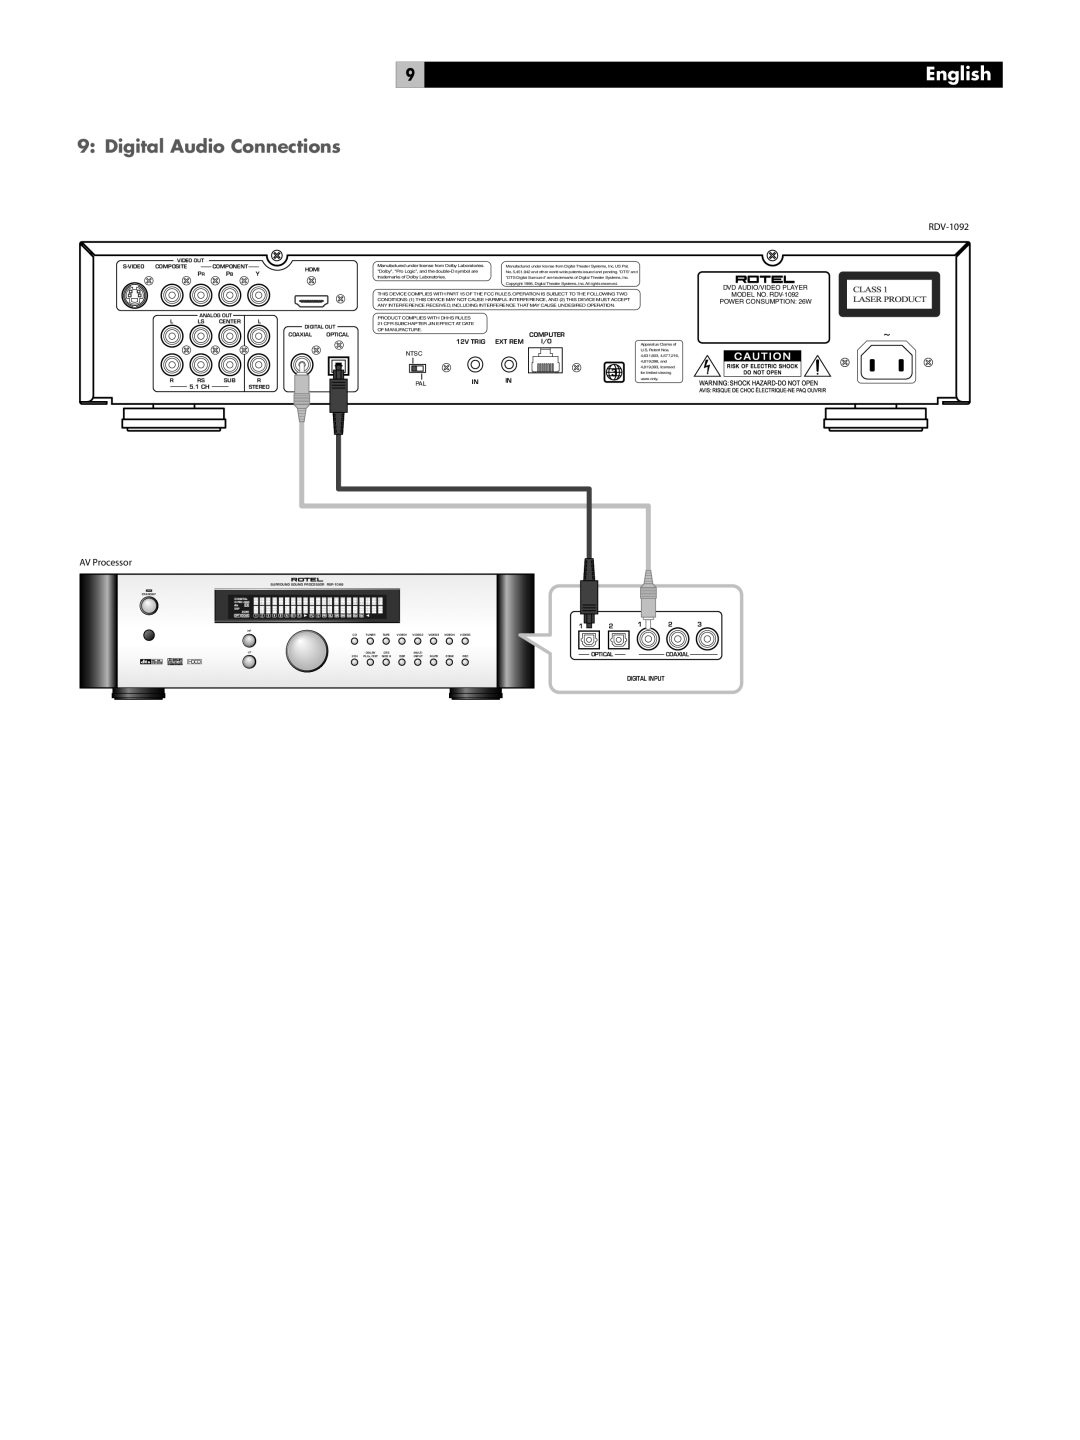 Rotel RDV-1092 owner manual Digital Audio Connections, English, Digital Input 